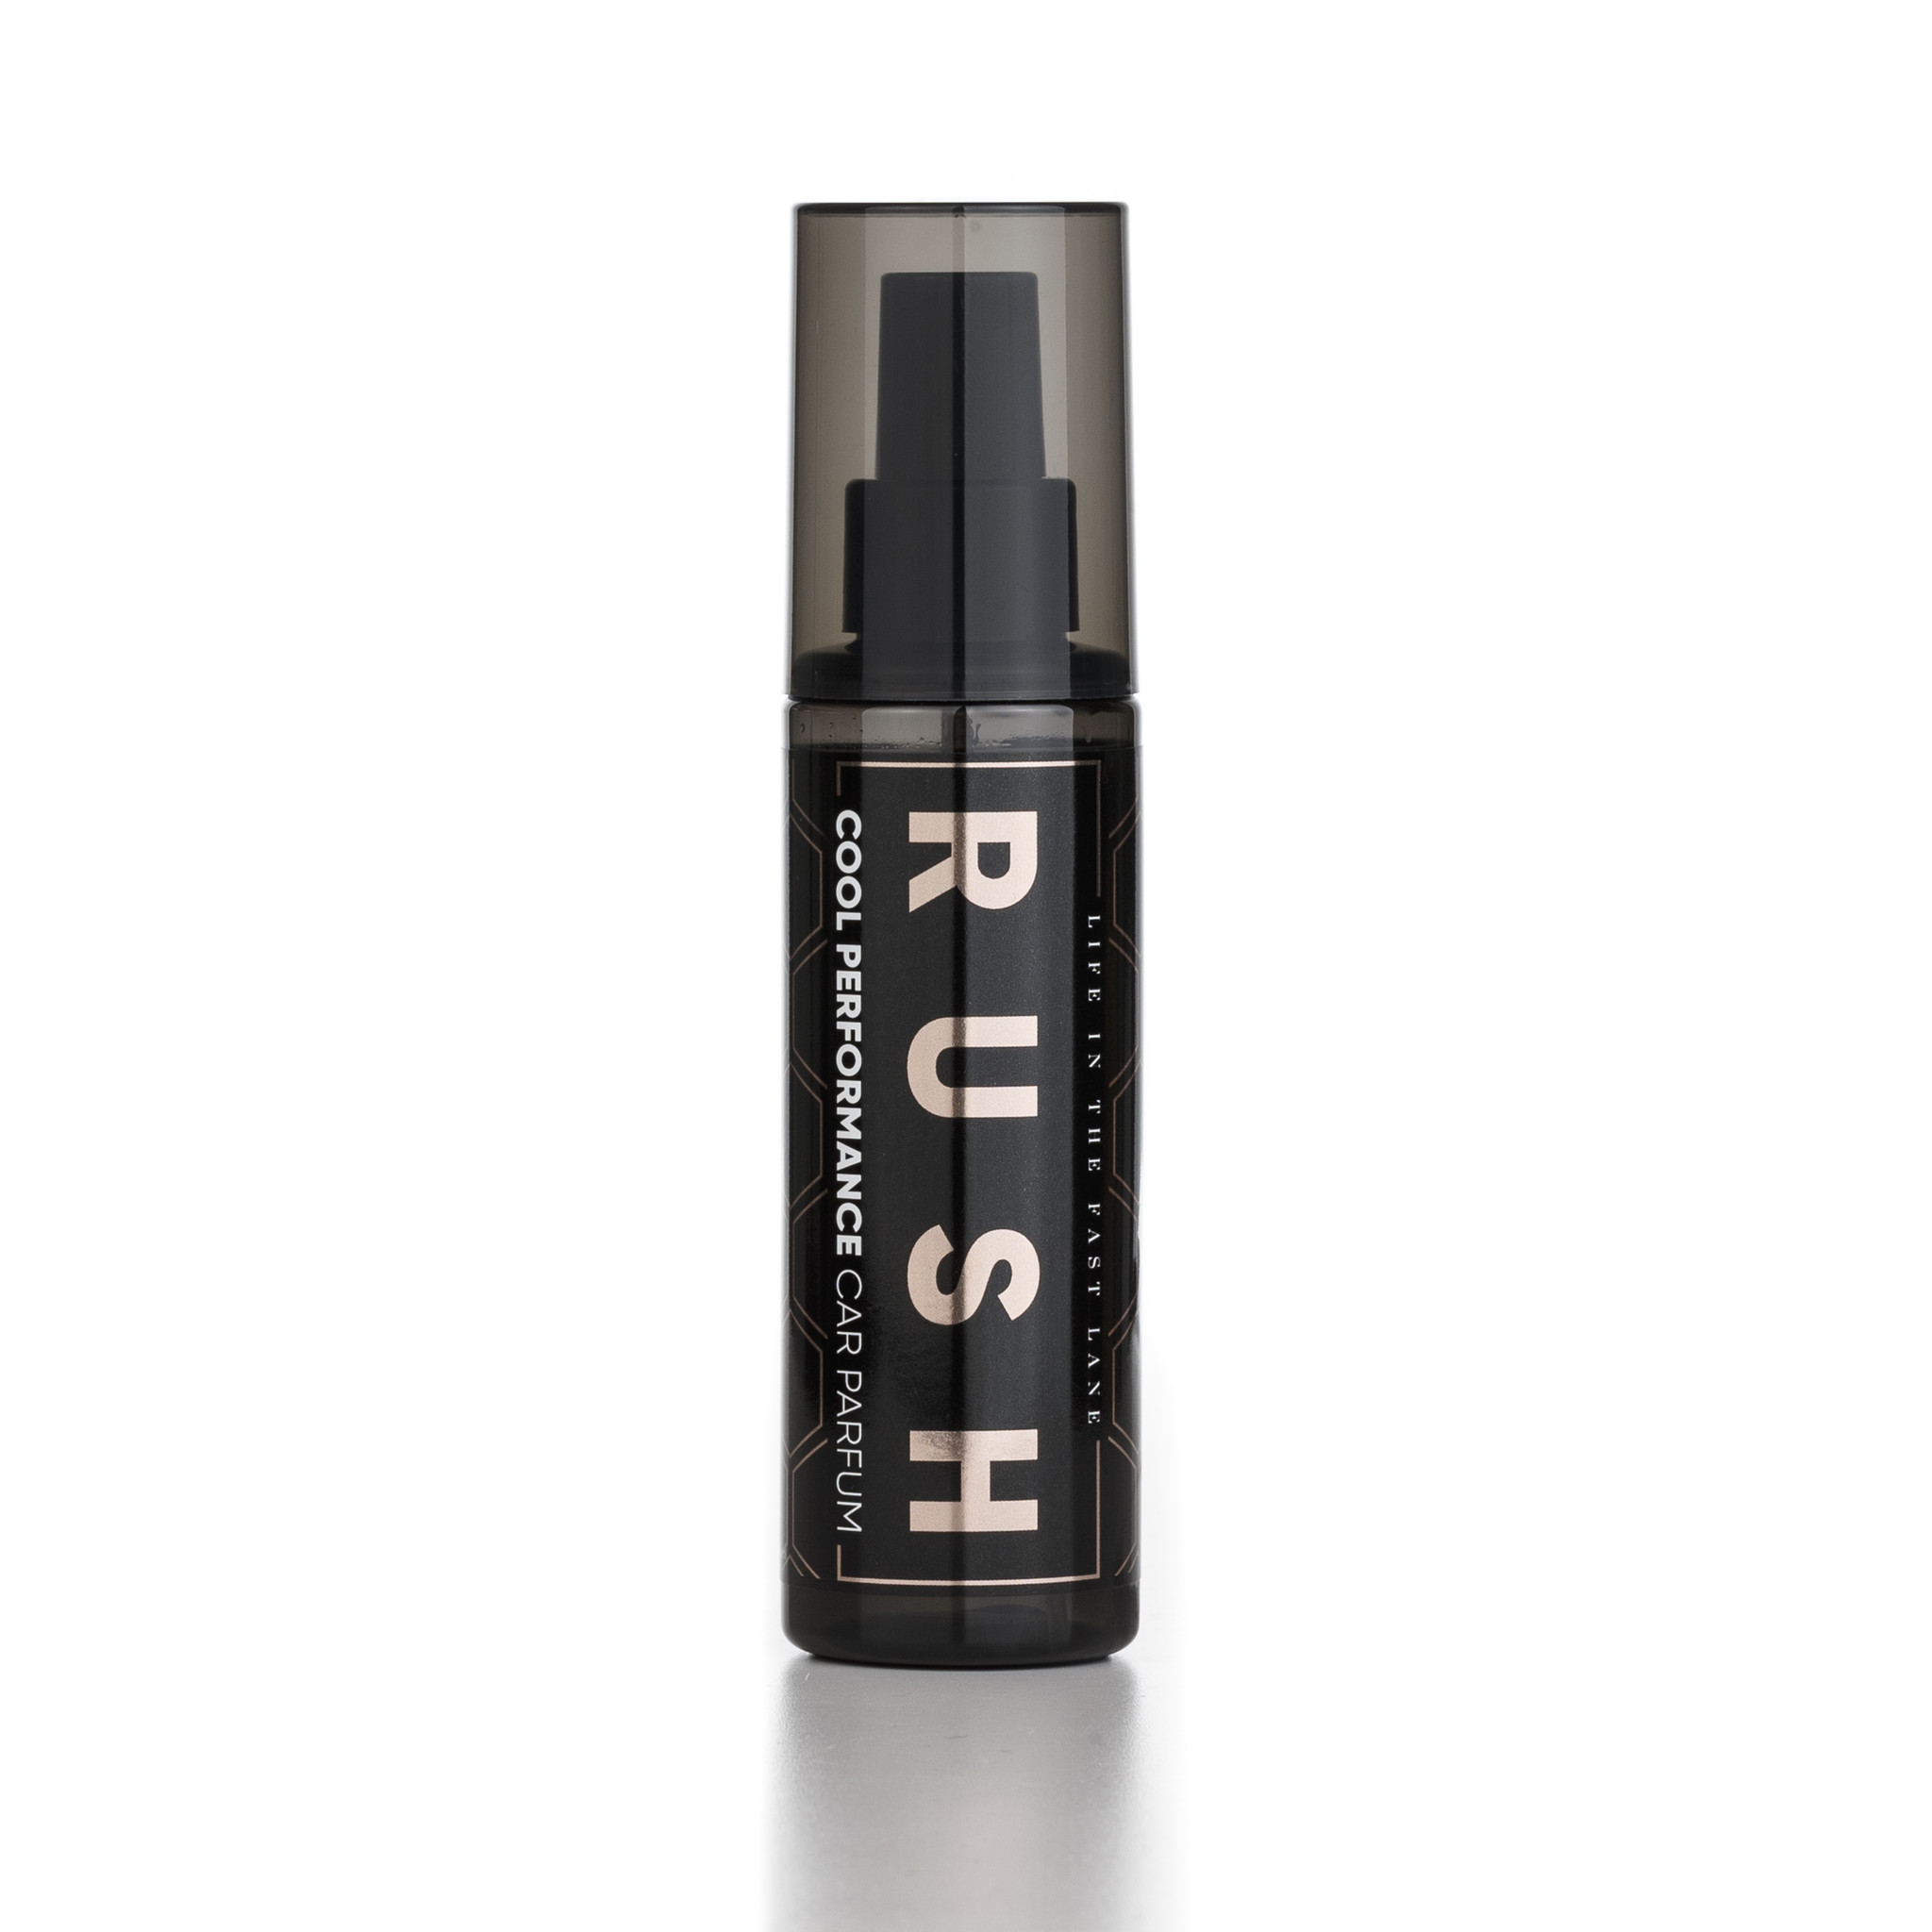 RUSH Cool Performance - 125ml